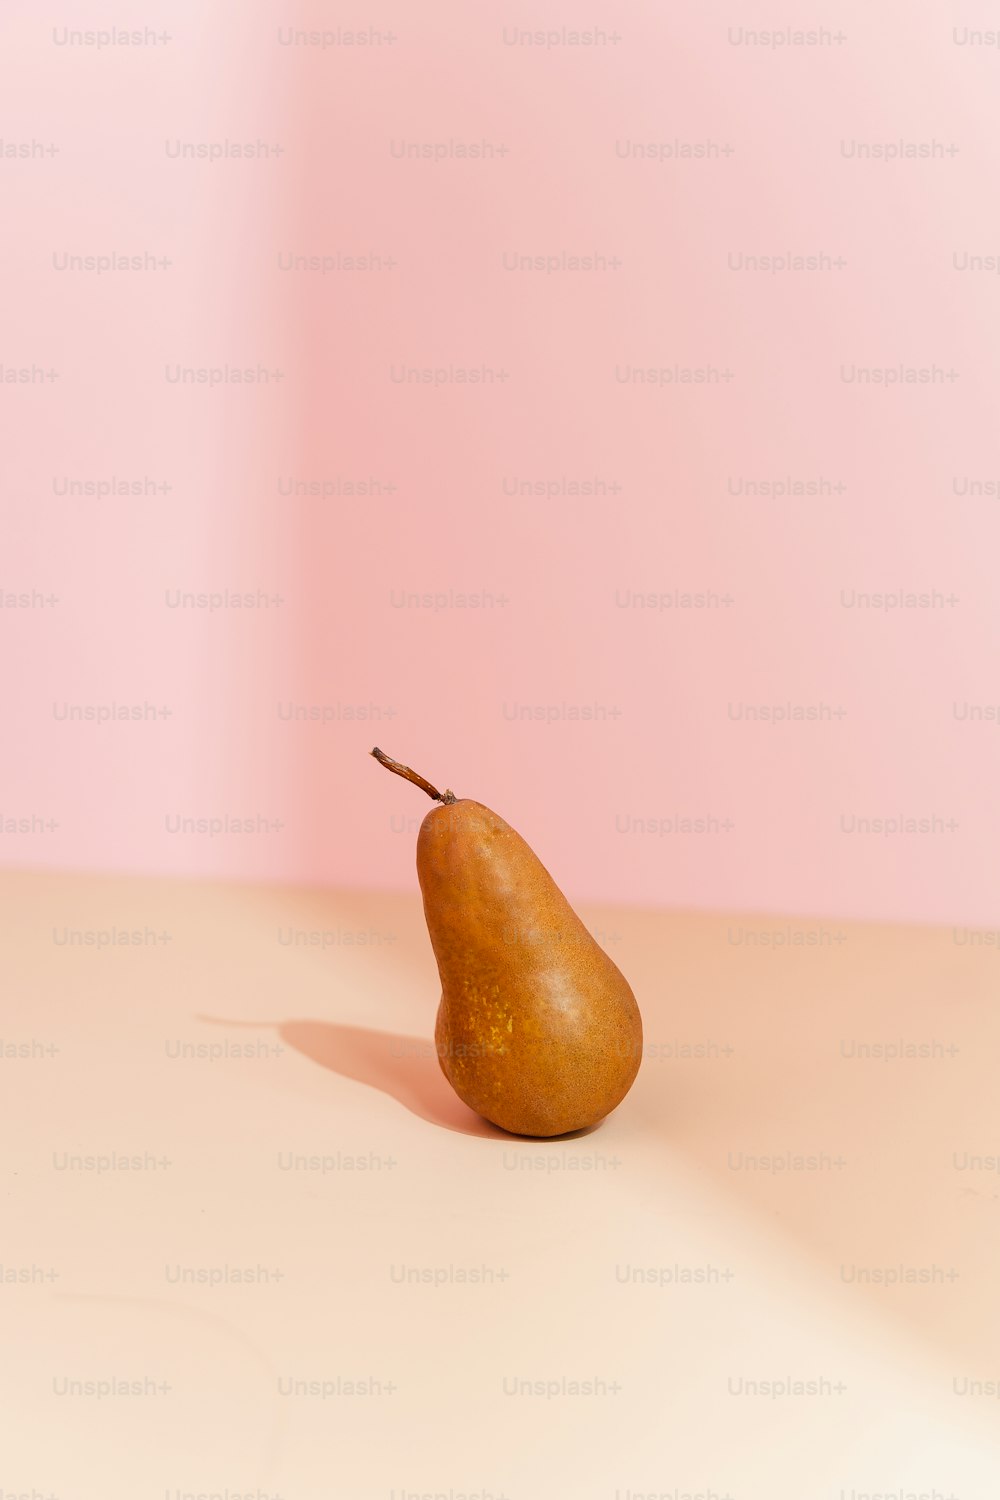 Una sola pera sentada en una mesa frente a una pared rosa